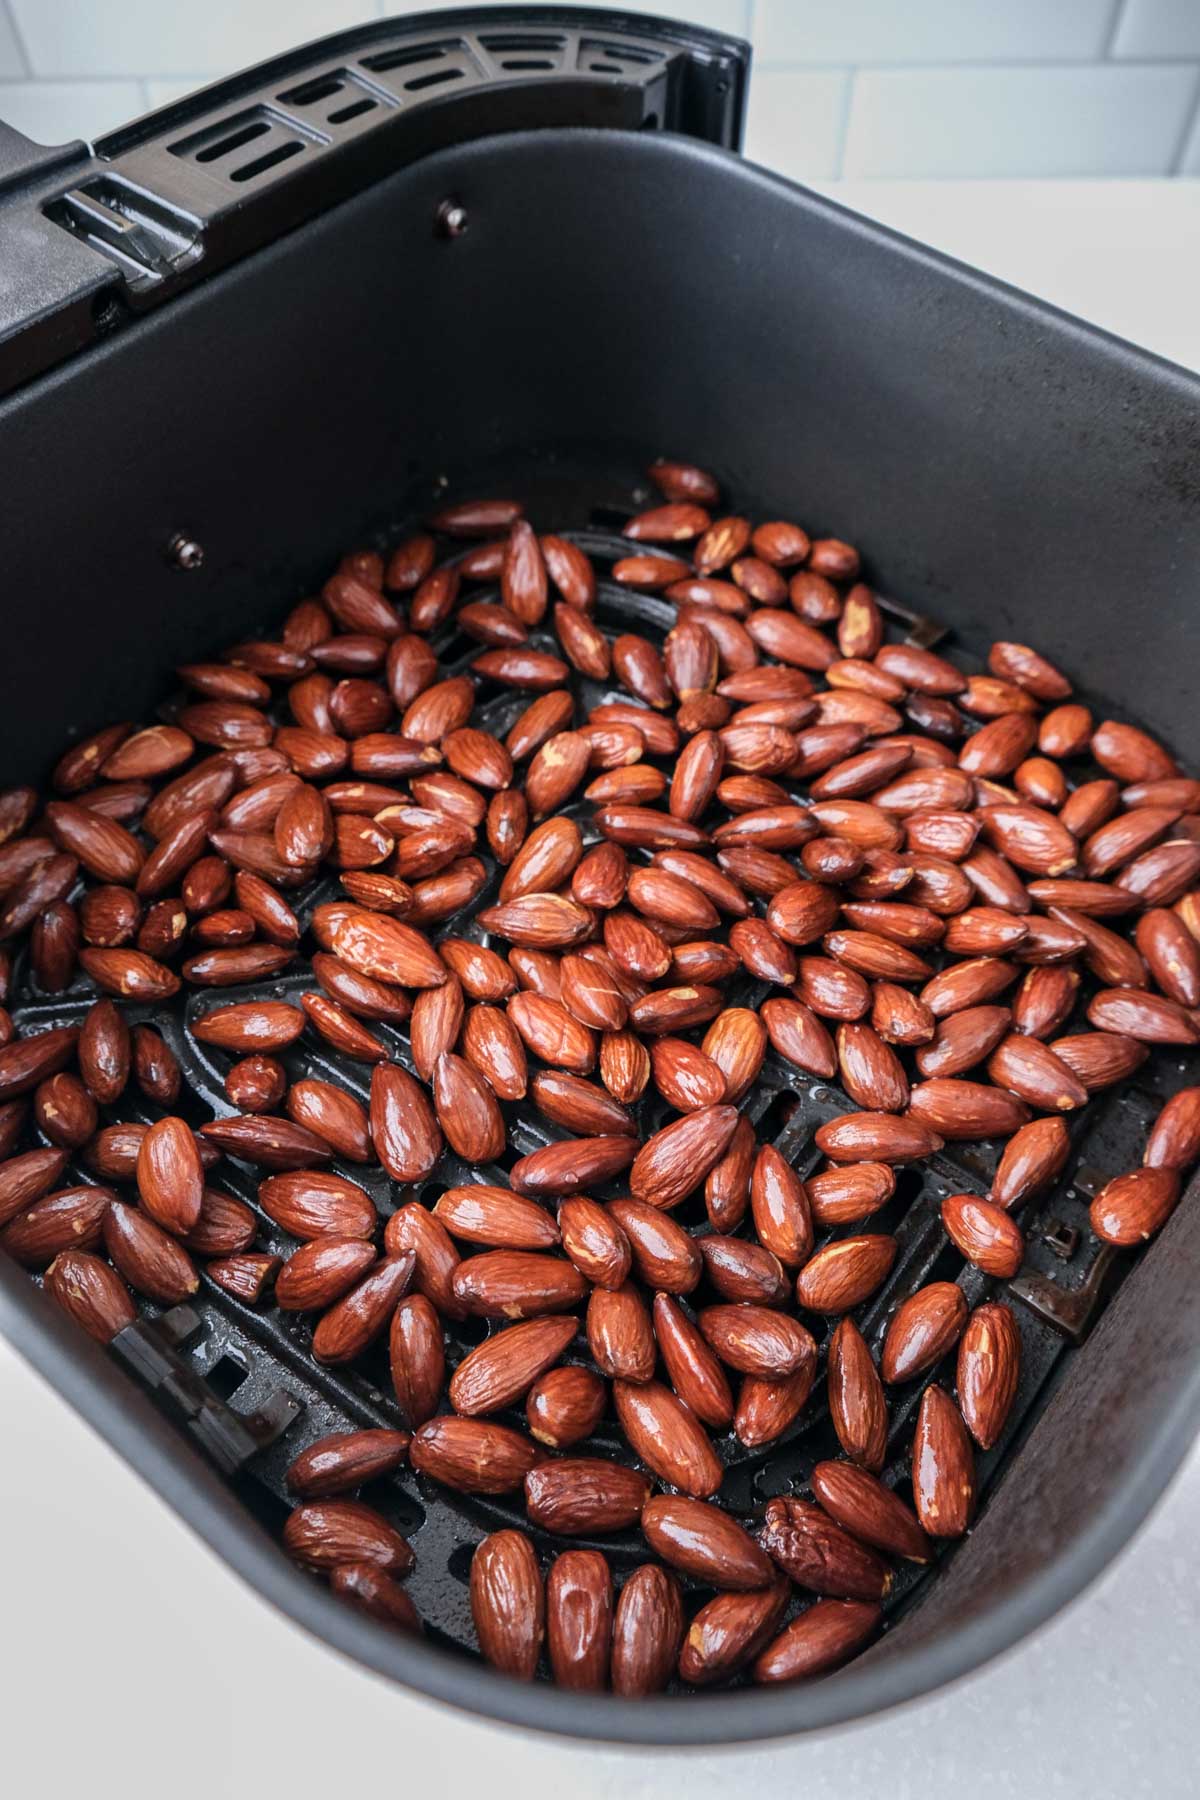 dark roasted almonds sitting in black air fryer tray on white kitchen counter.